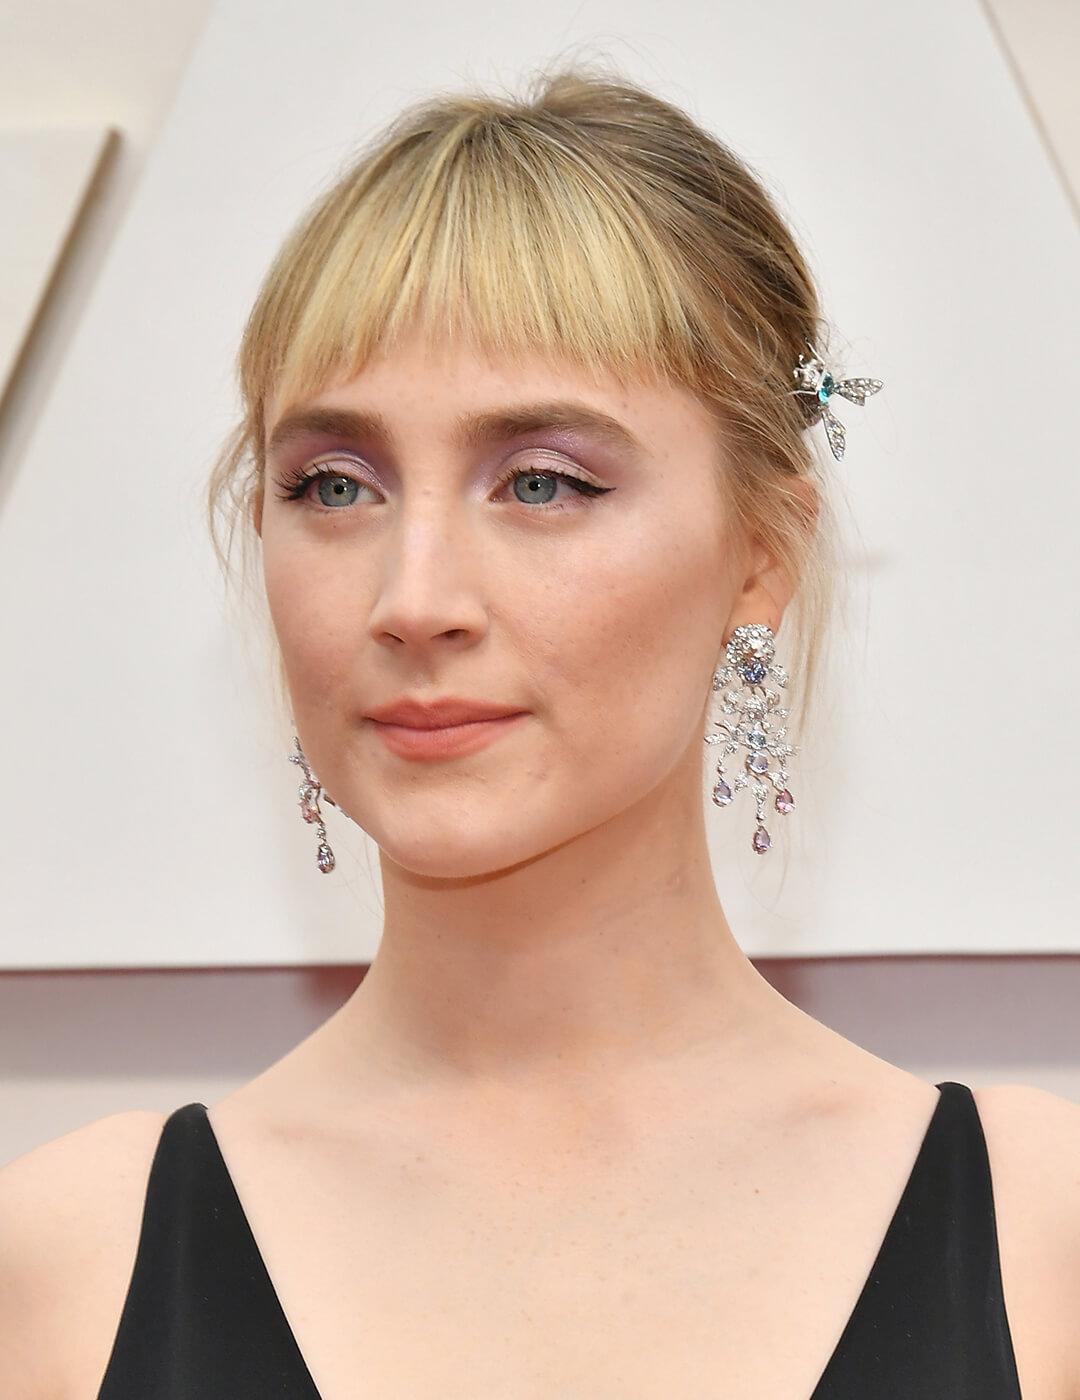 Saoirse Ronan looking elegant in silver jewelry, black dress, lavender eyeshadow makeup look, and updo hairstyle with bangs